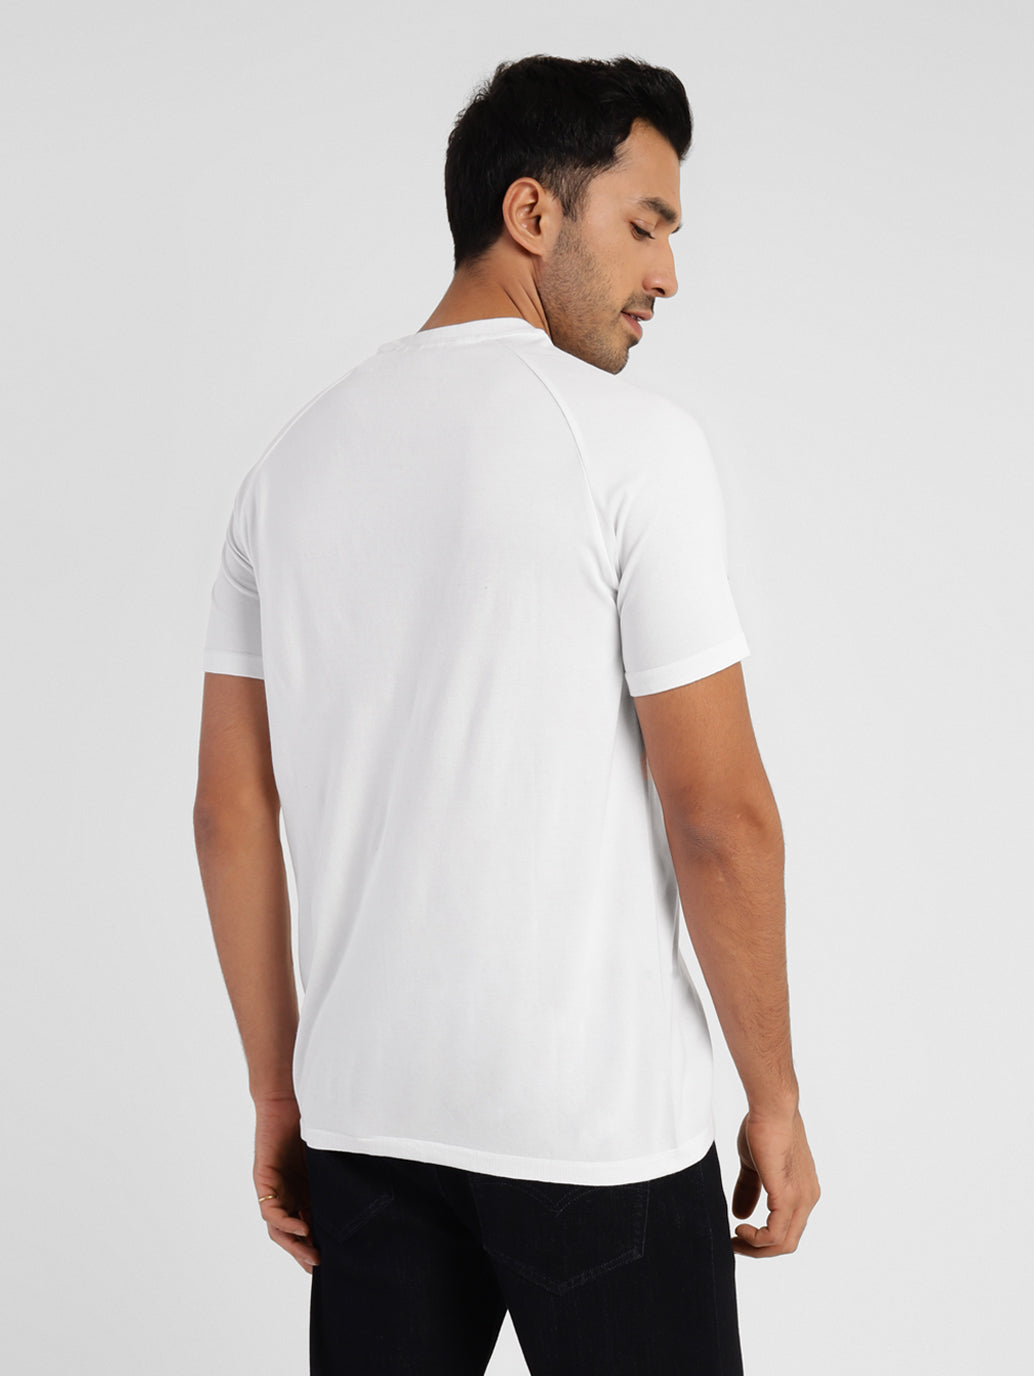 Men's Solid Crew Neck T-shirt White